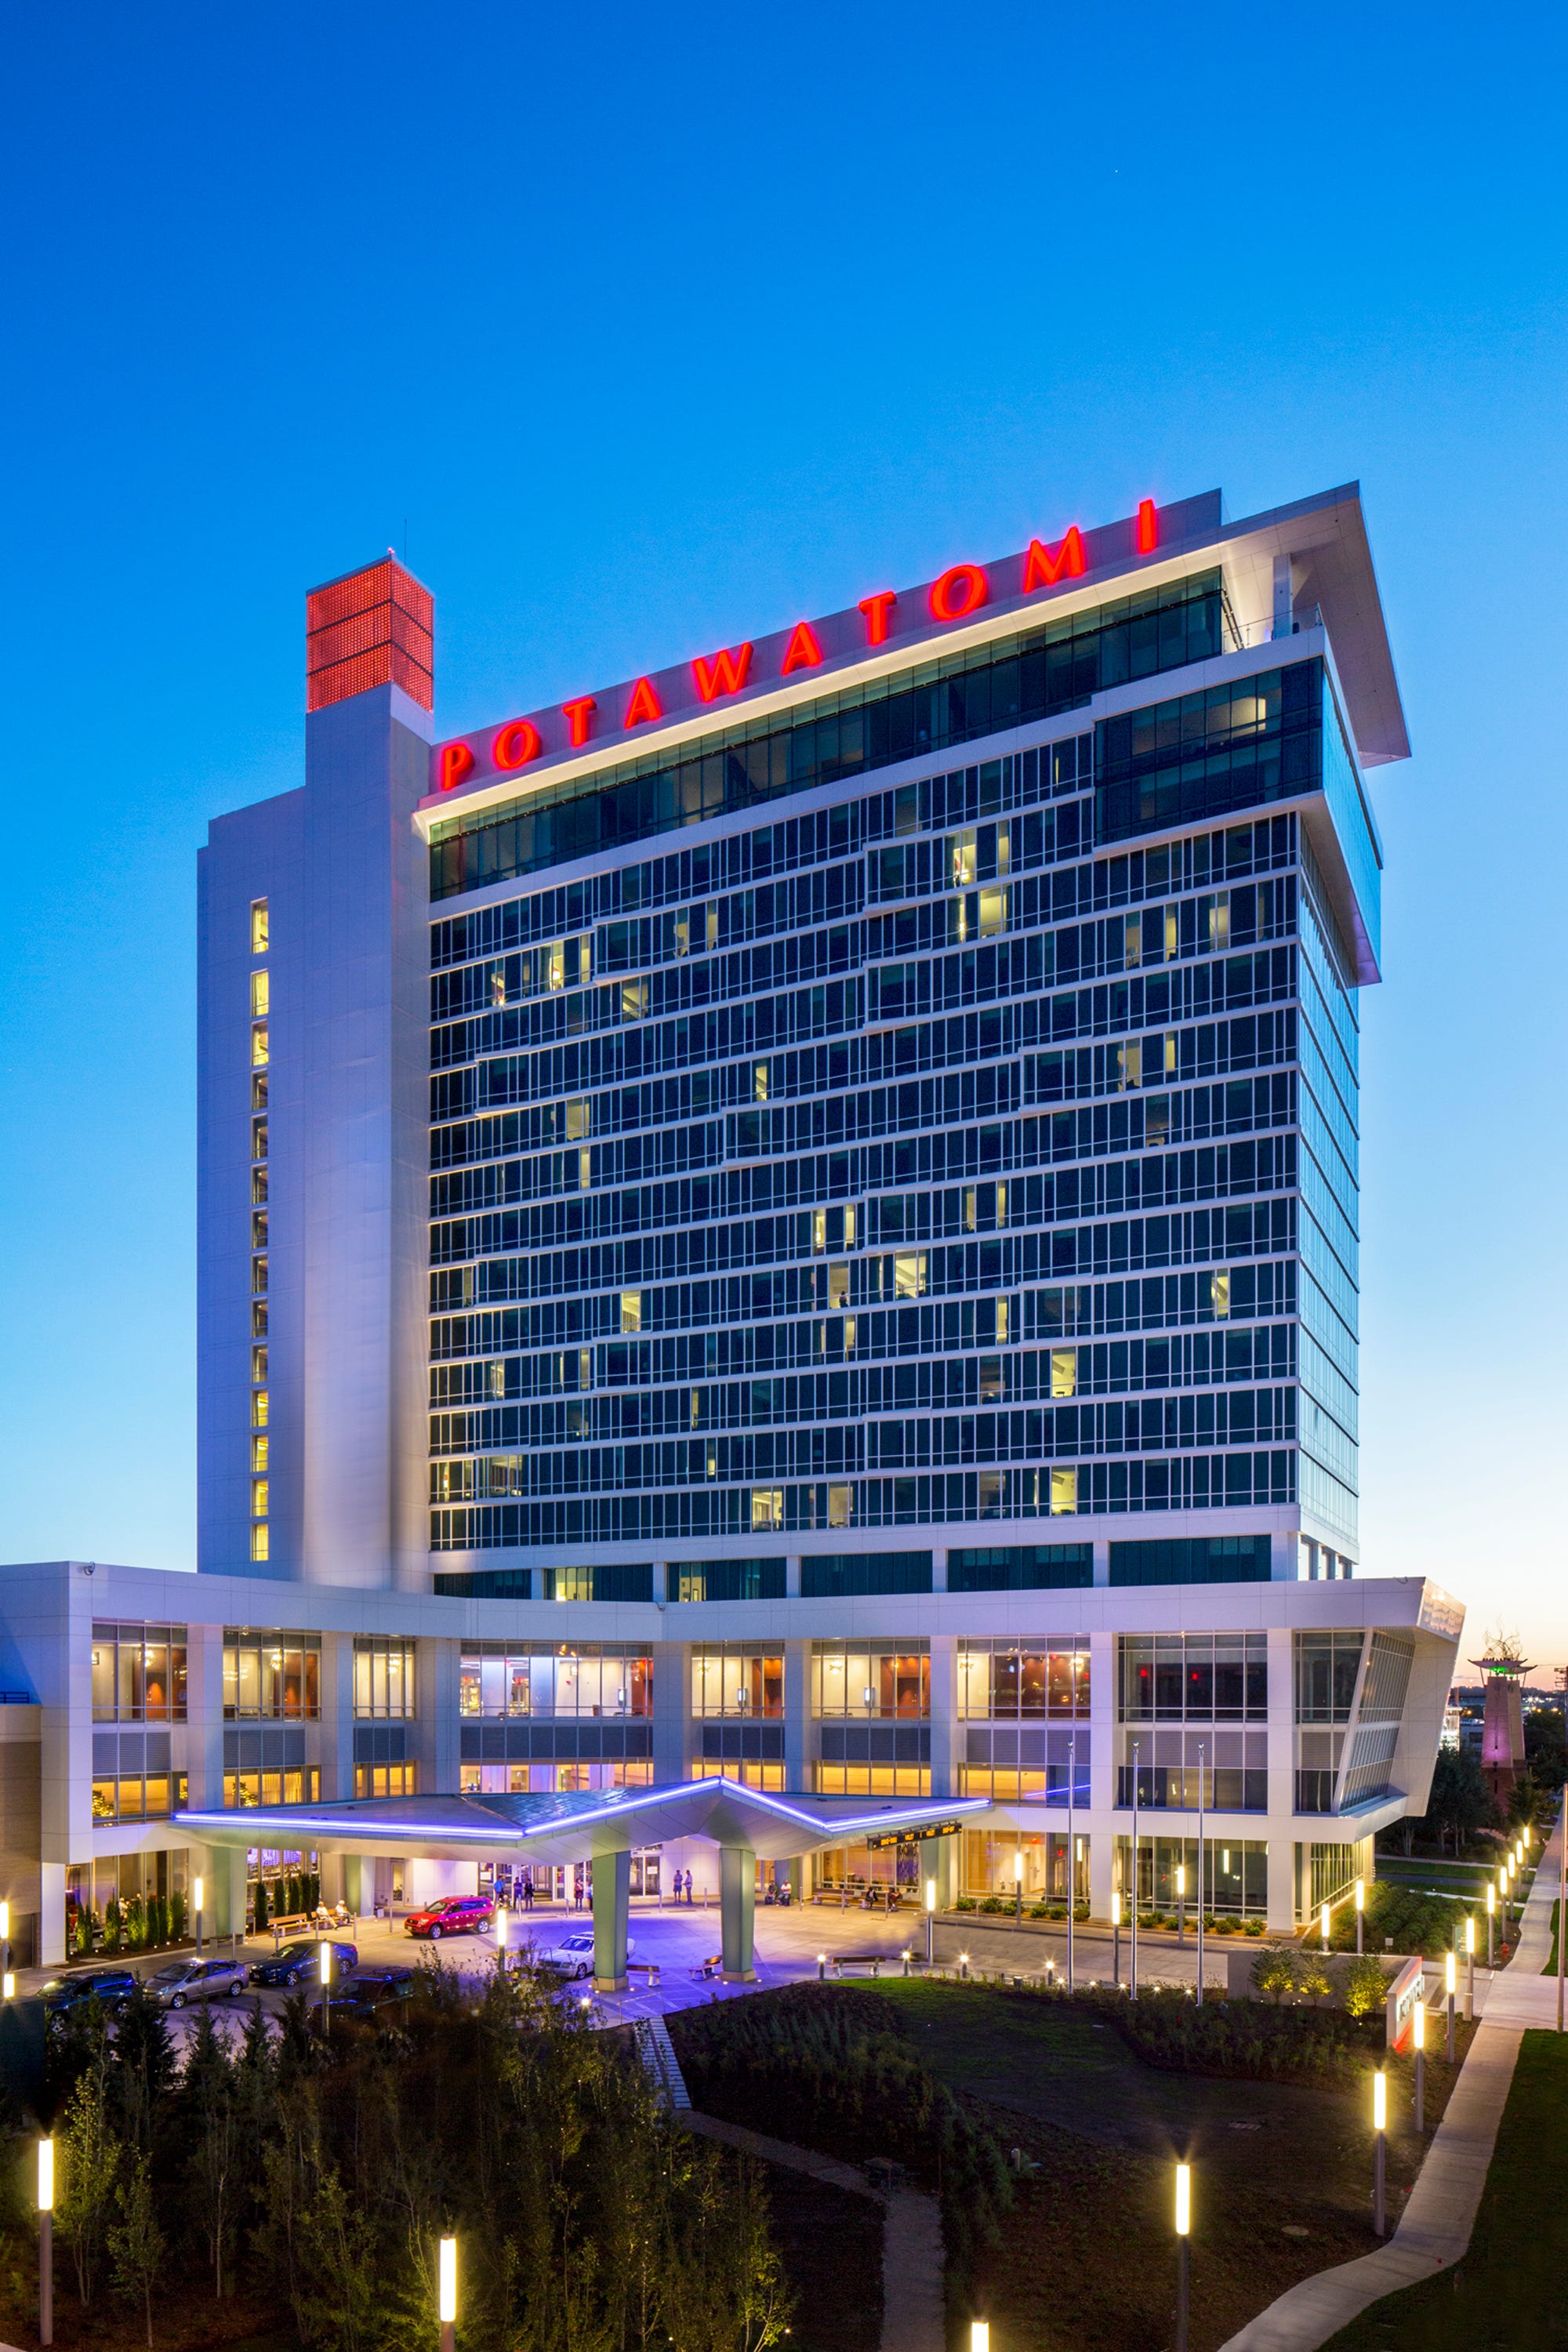 hotels near potawatomi casino under 200 dollars